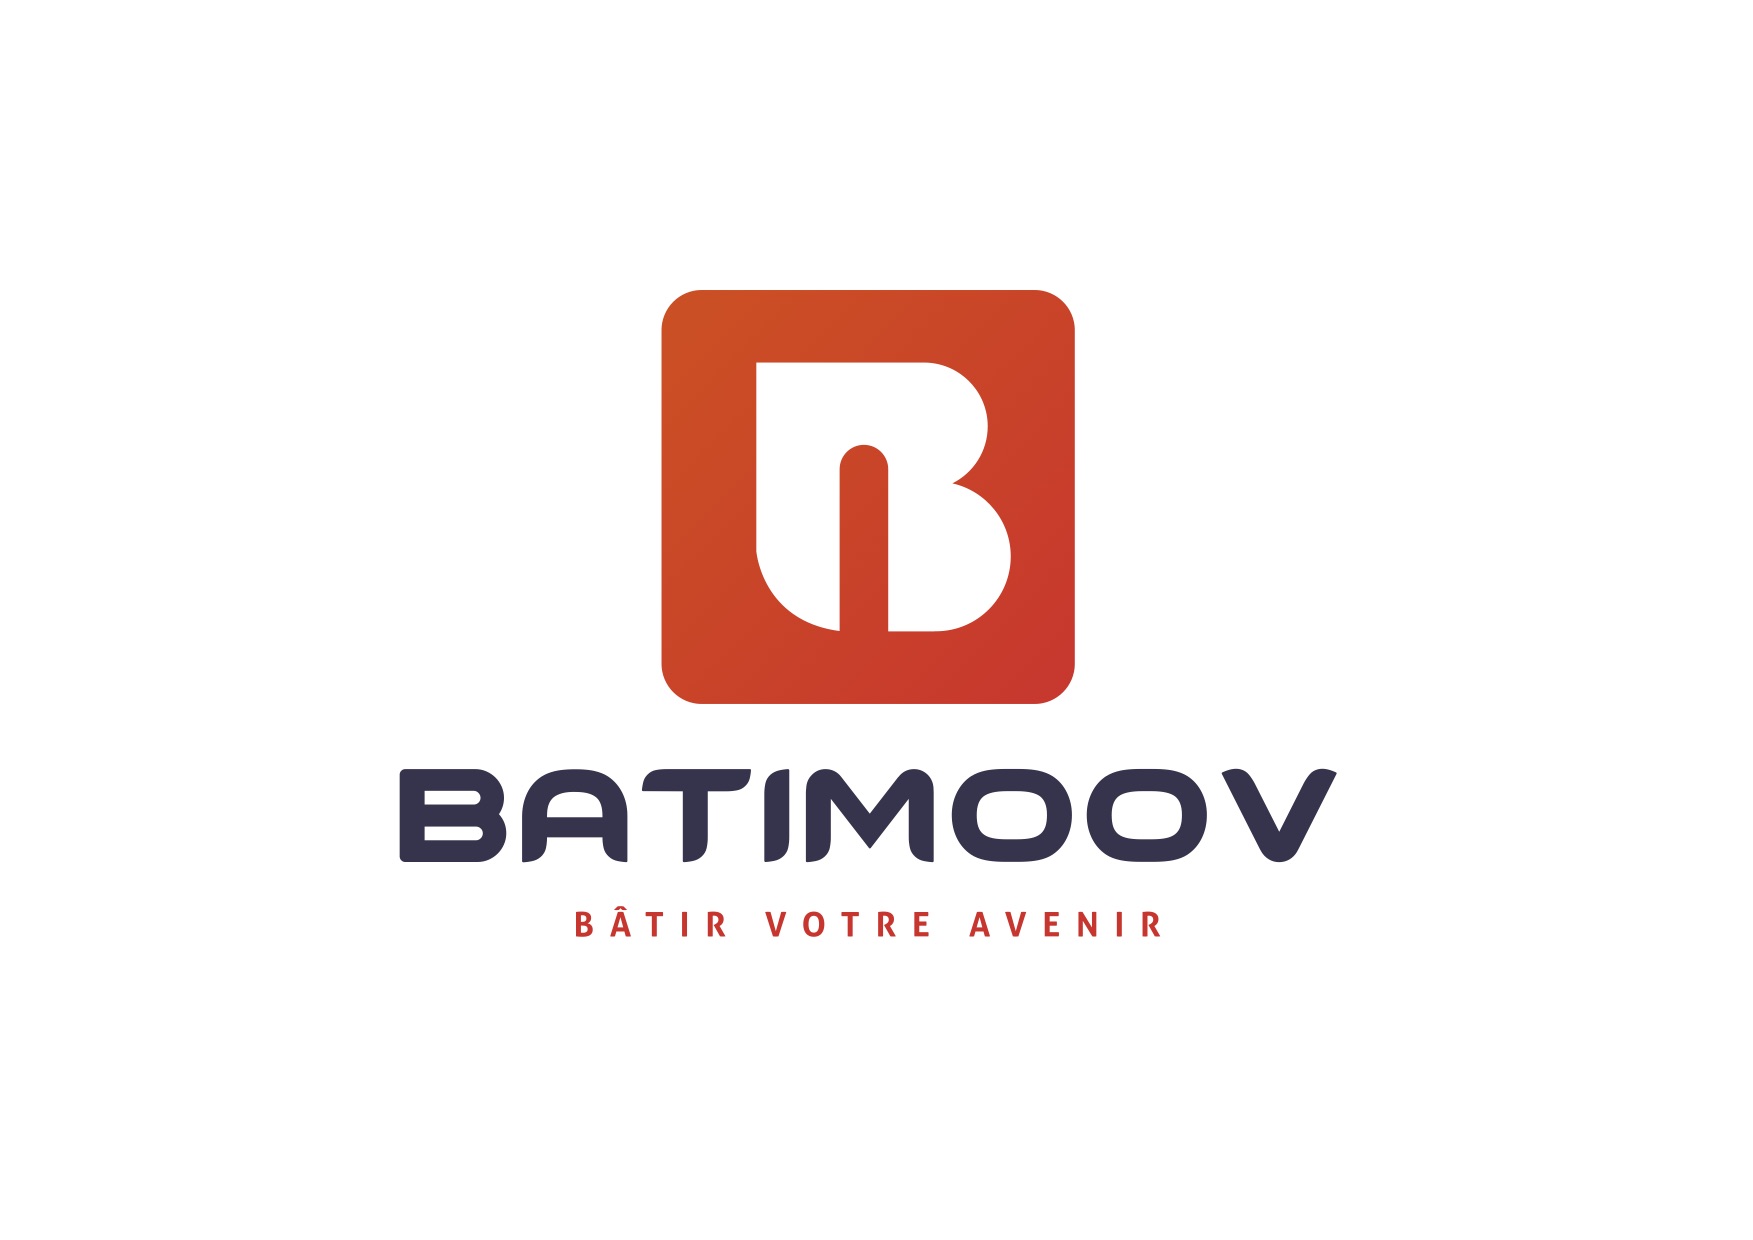 BATIMOOV-LOGO-atif.jpg